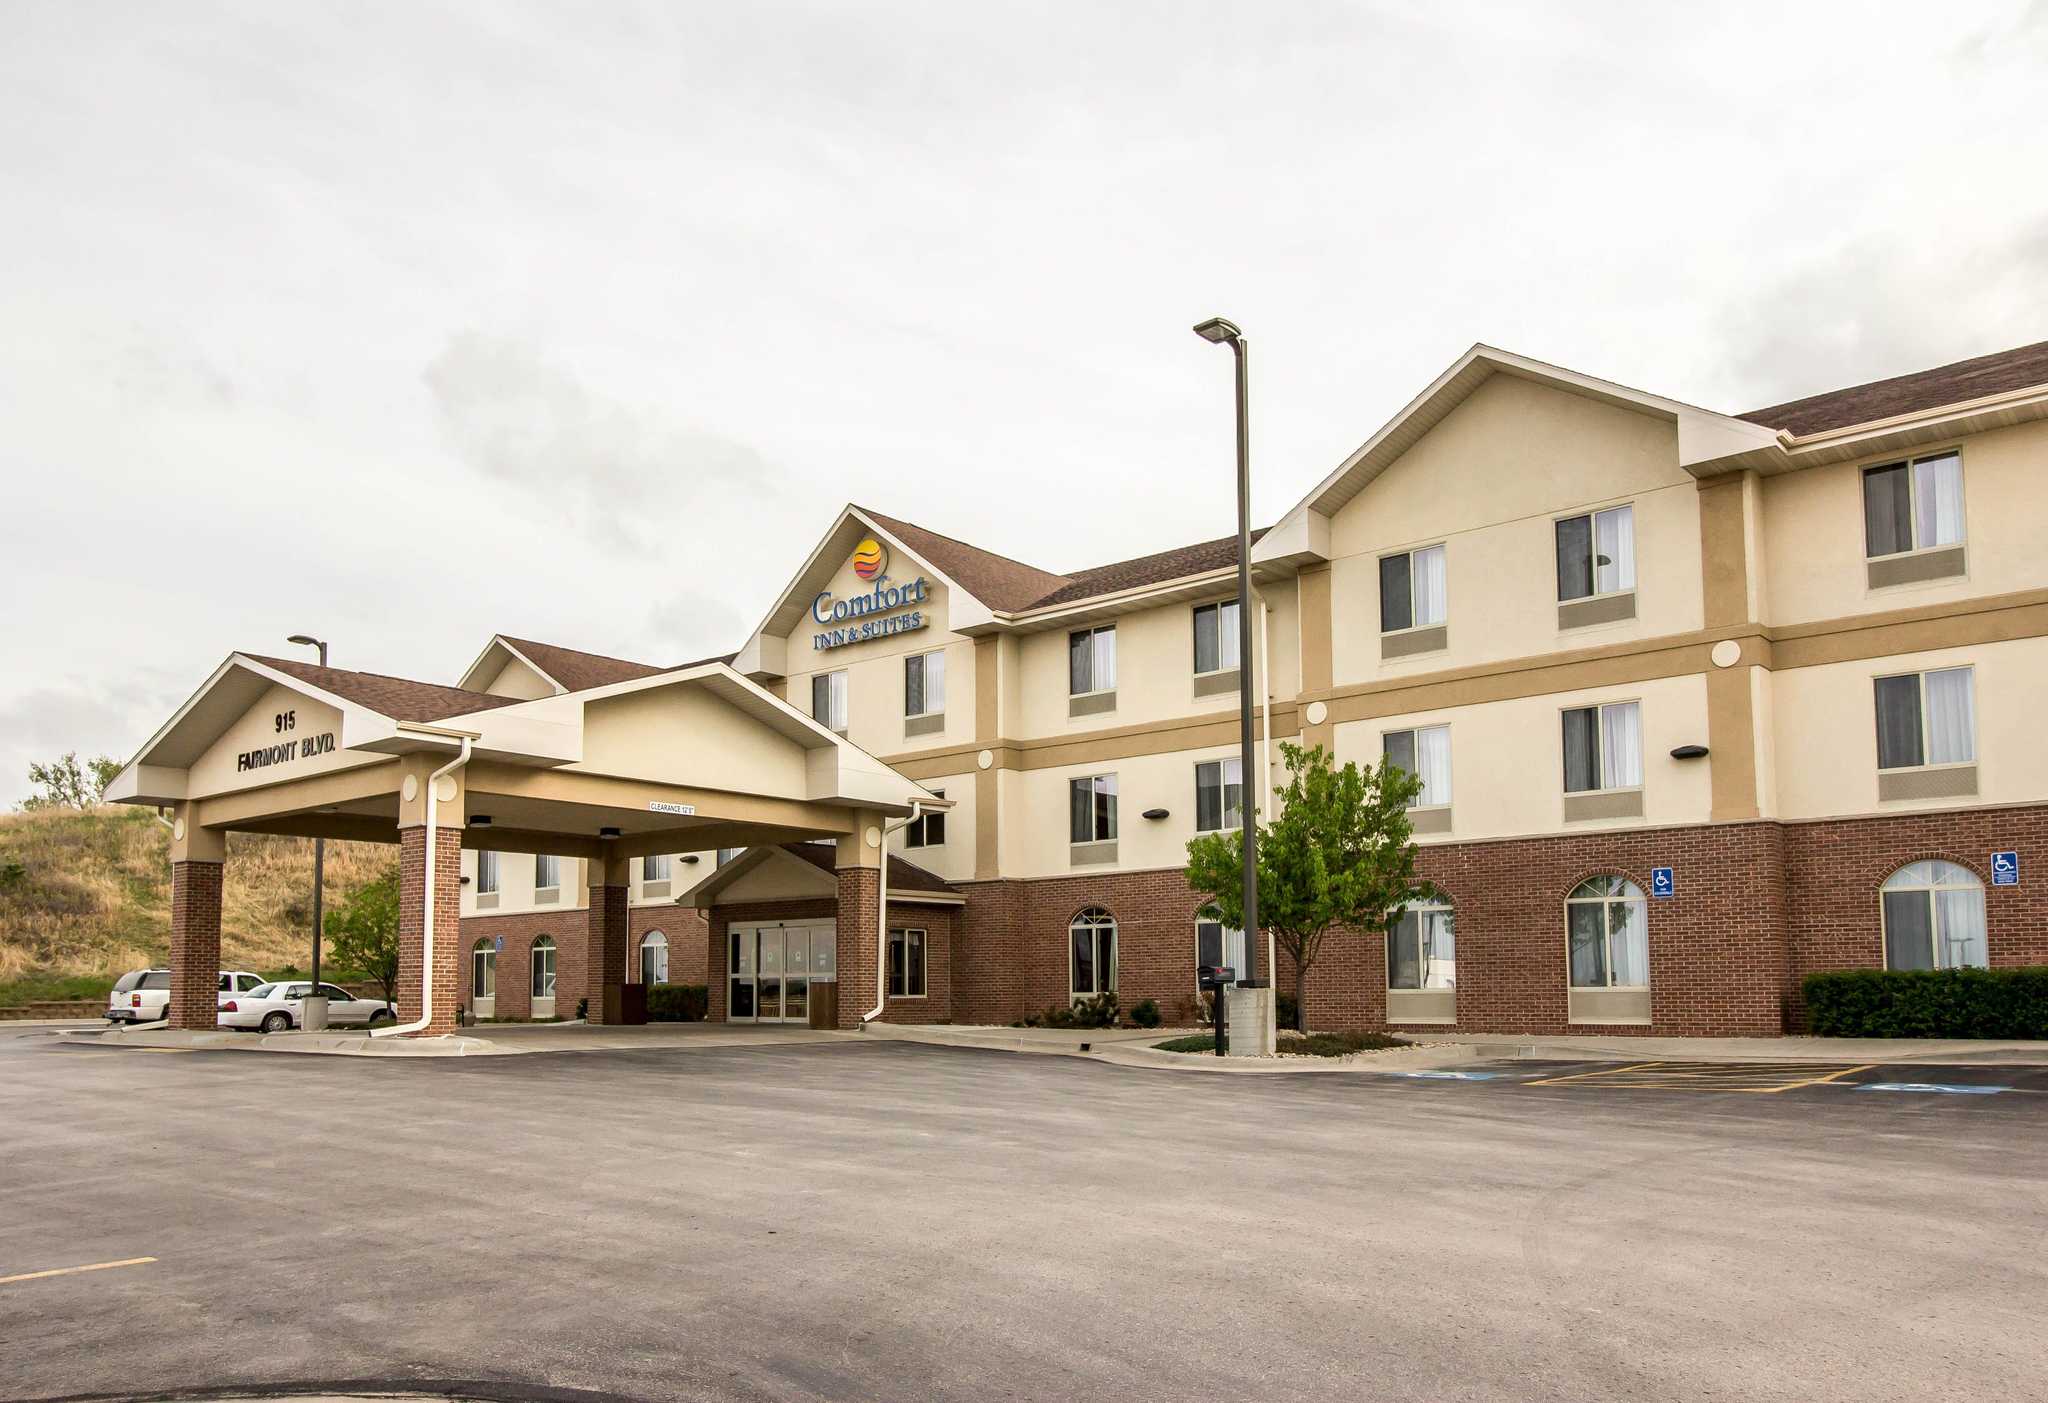 Comfort Inn & Suites, Rapid City South Dakota (SD. 